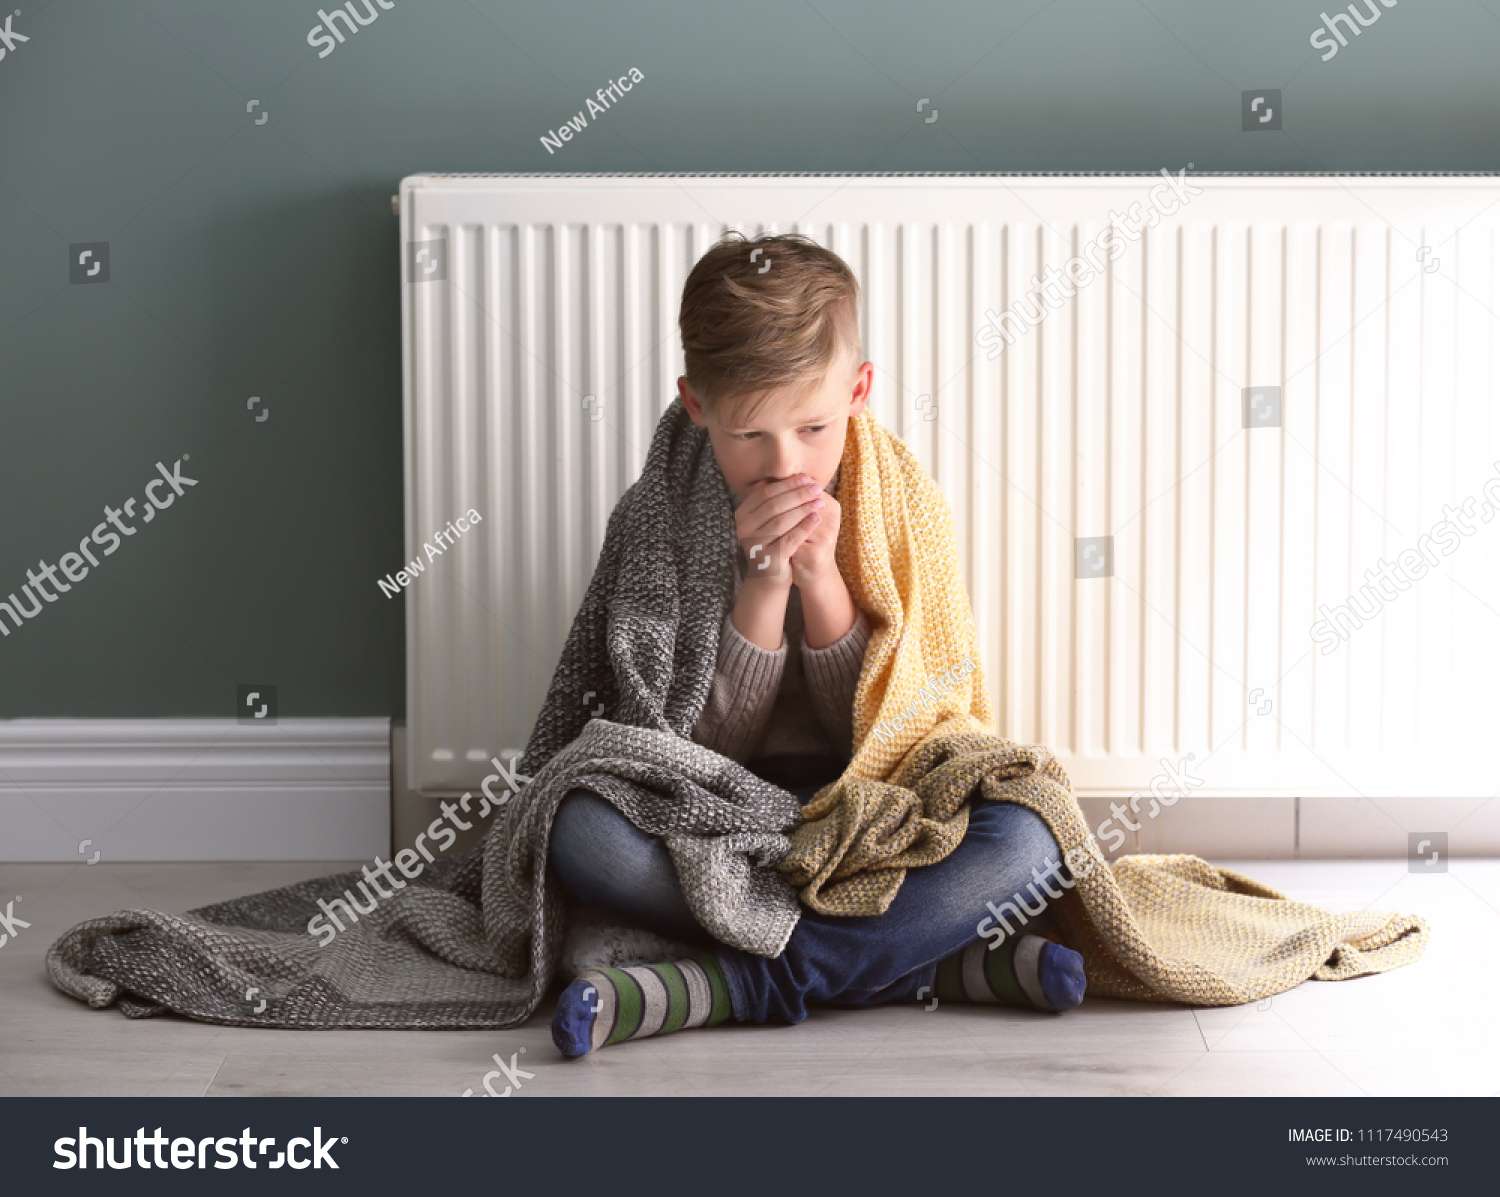 Sad little boy suffering from cold on floor near radiator #1117490543